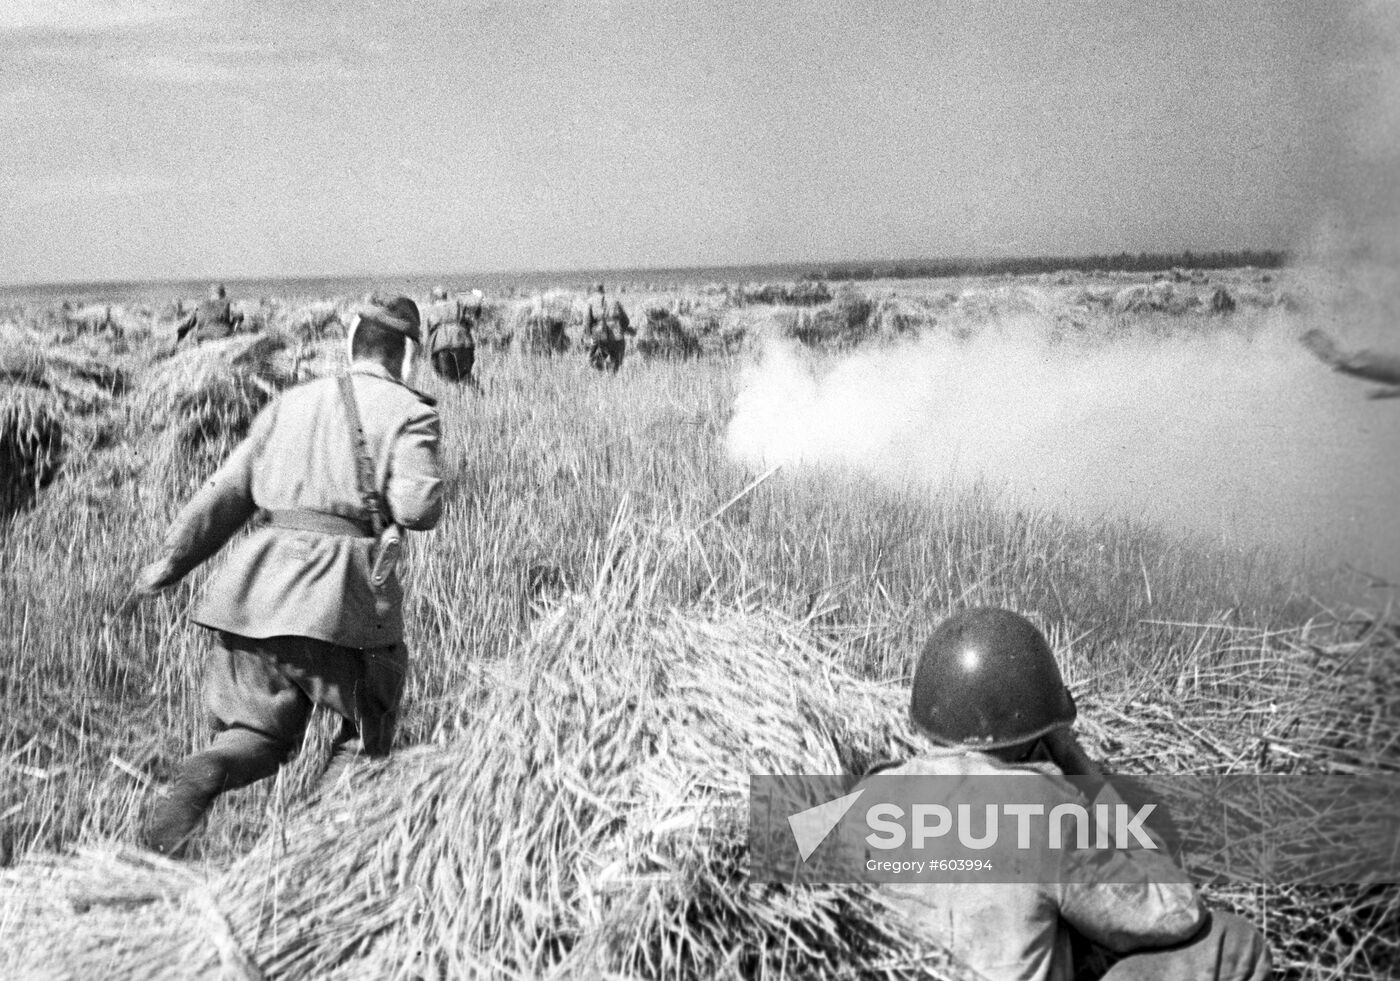 The 1941-1945 Great Patriotic War